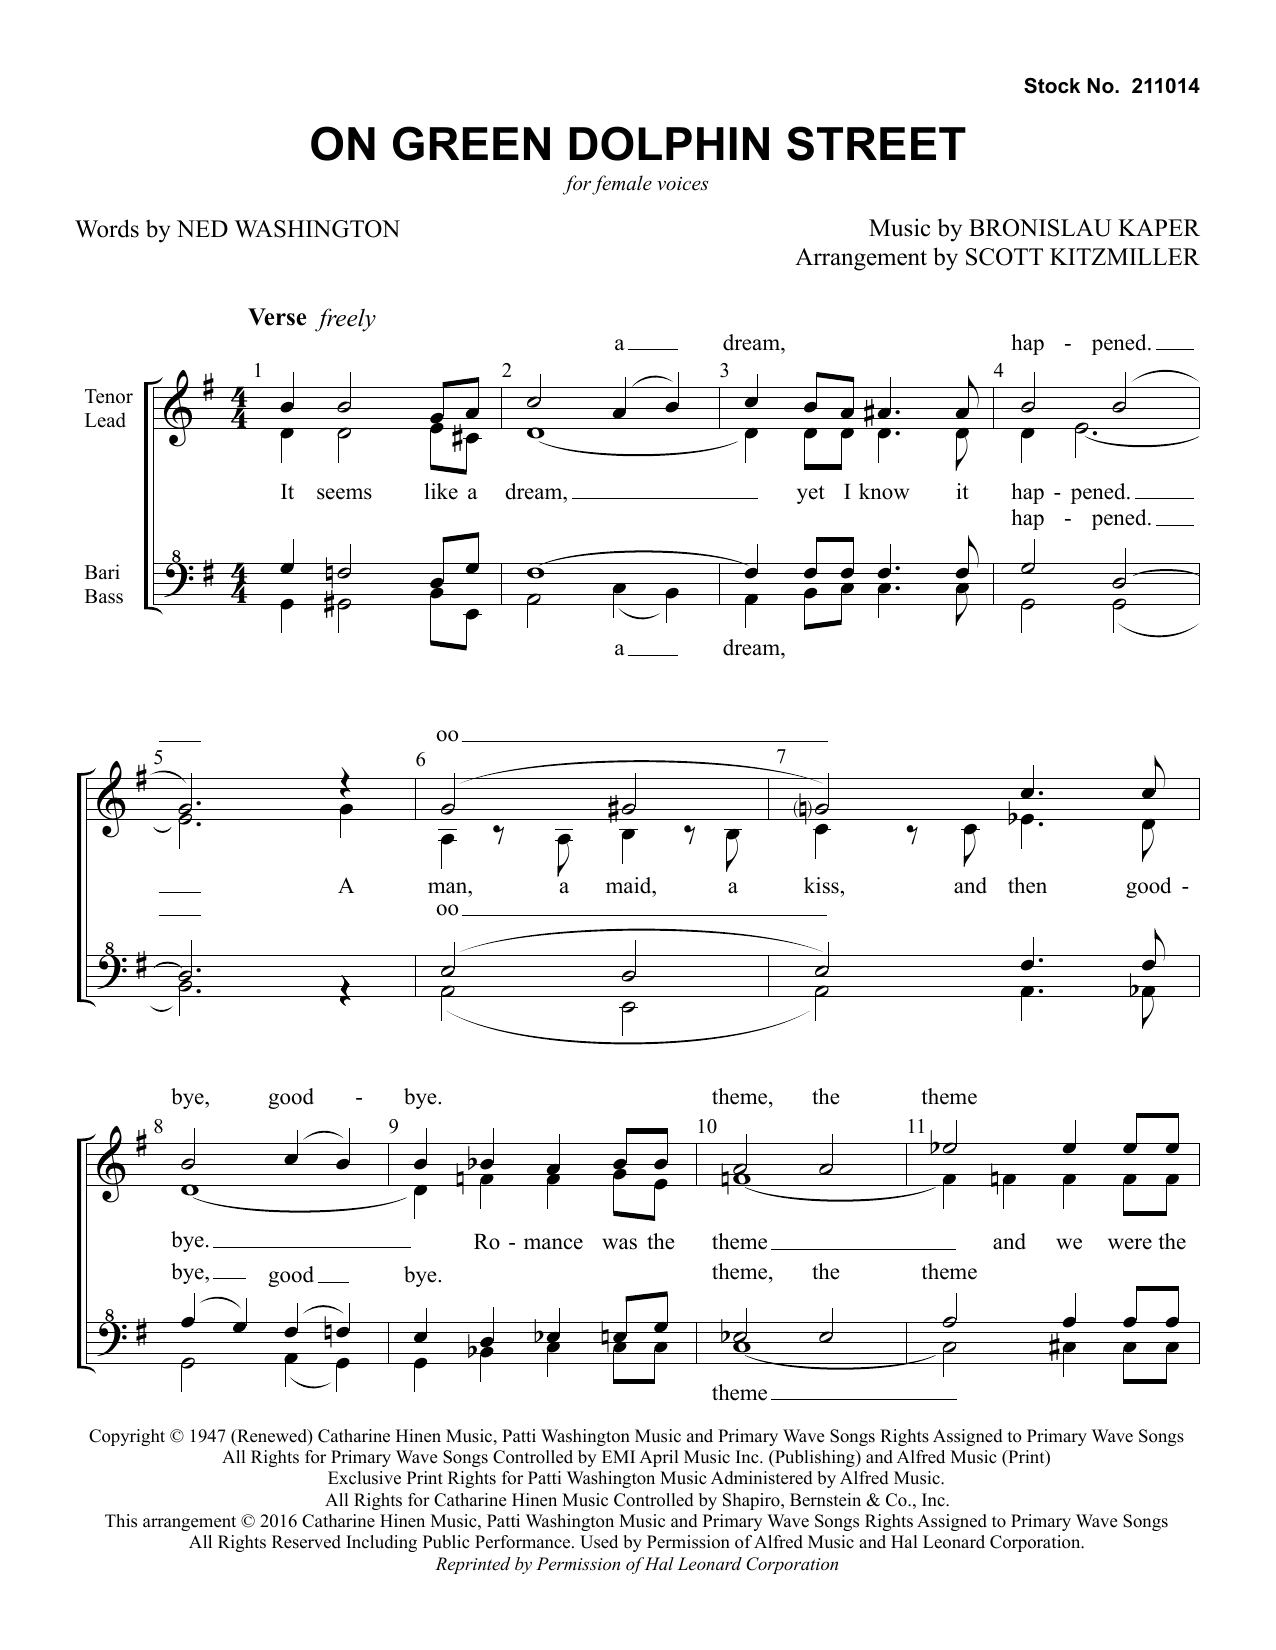 Jimmy Dorsey Orchestra On Green Dolphin Street (arr. Scott Kitzmiller) Sheet Music Notes & Chords for TTBB Choir - Download or Print PDF